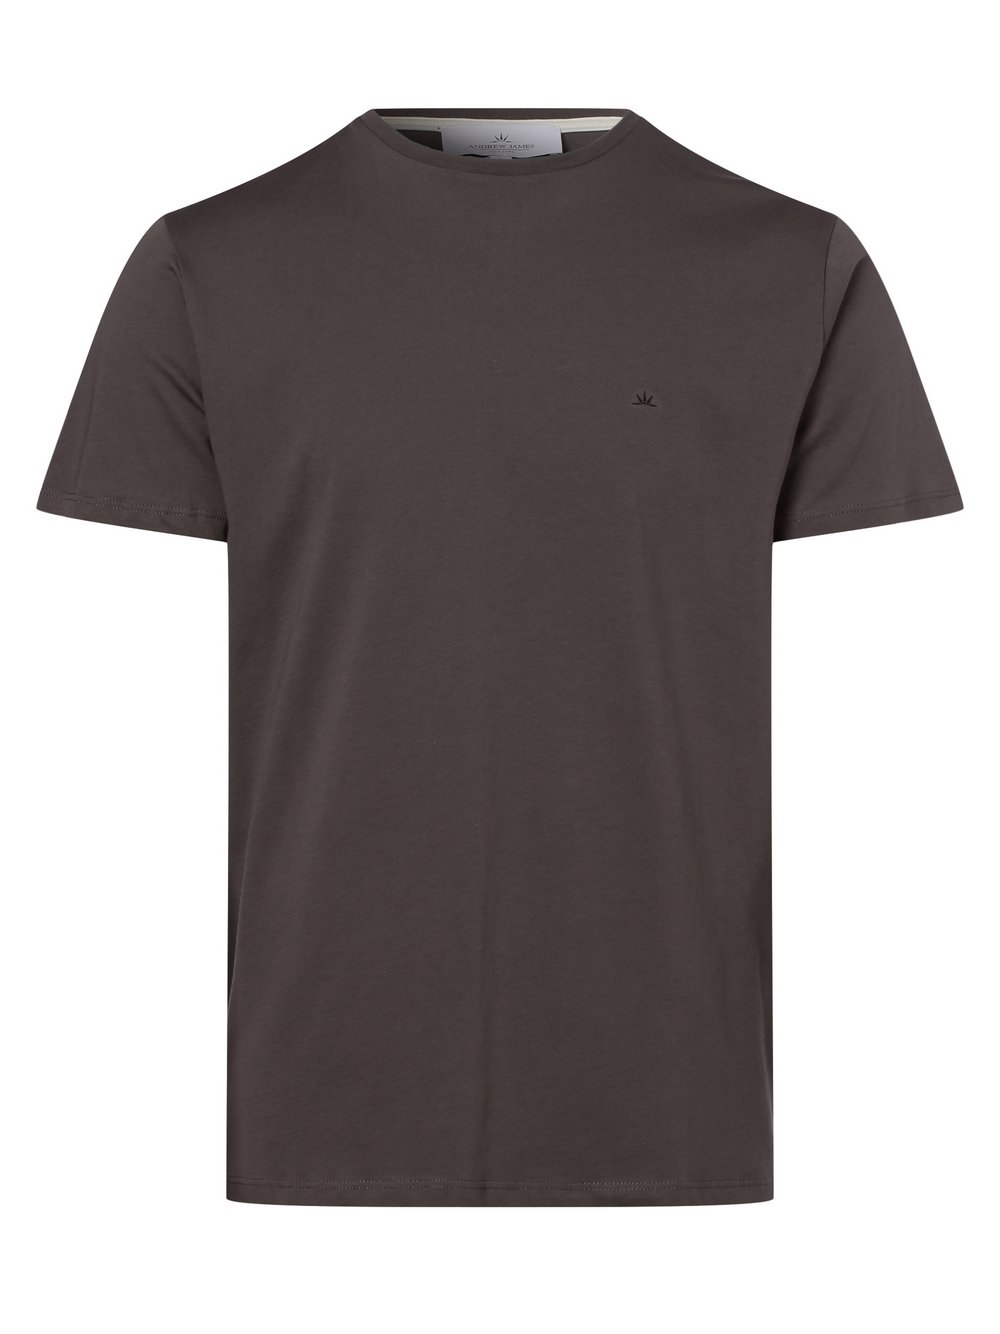 Andrew James New York - T-shirt męski, szary